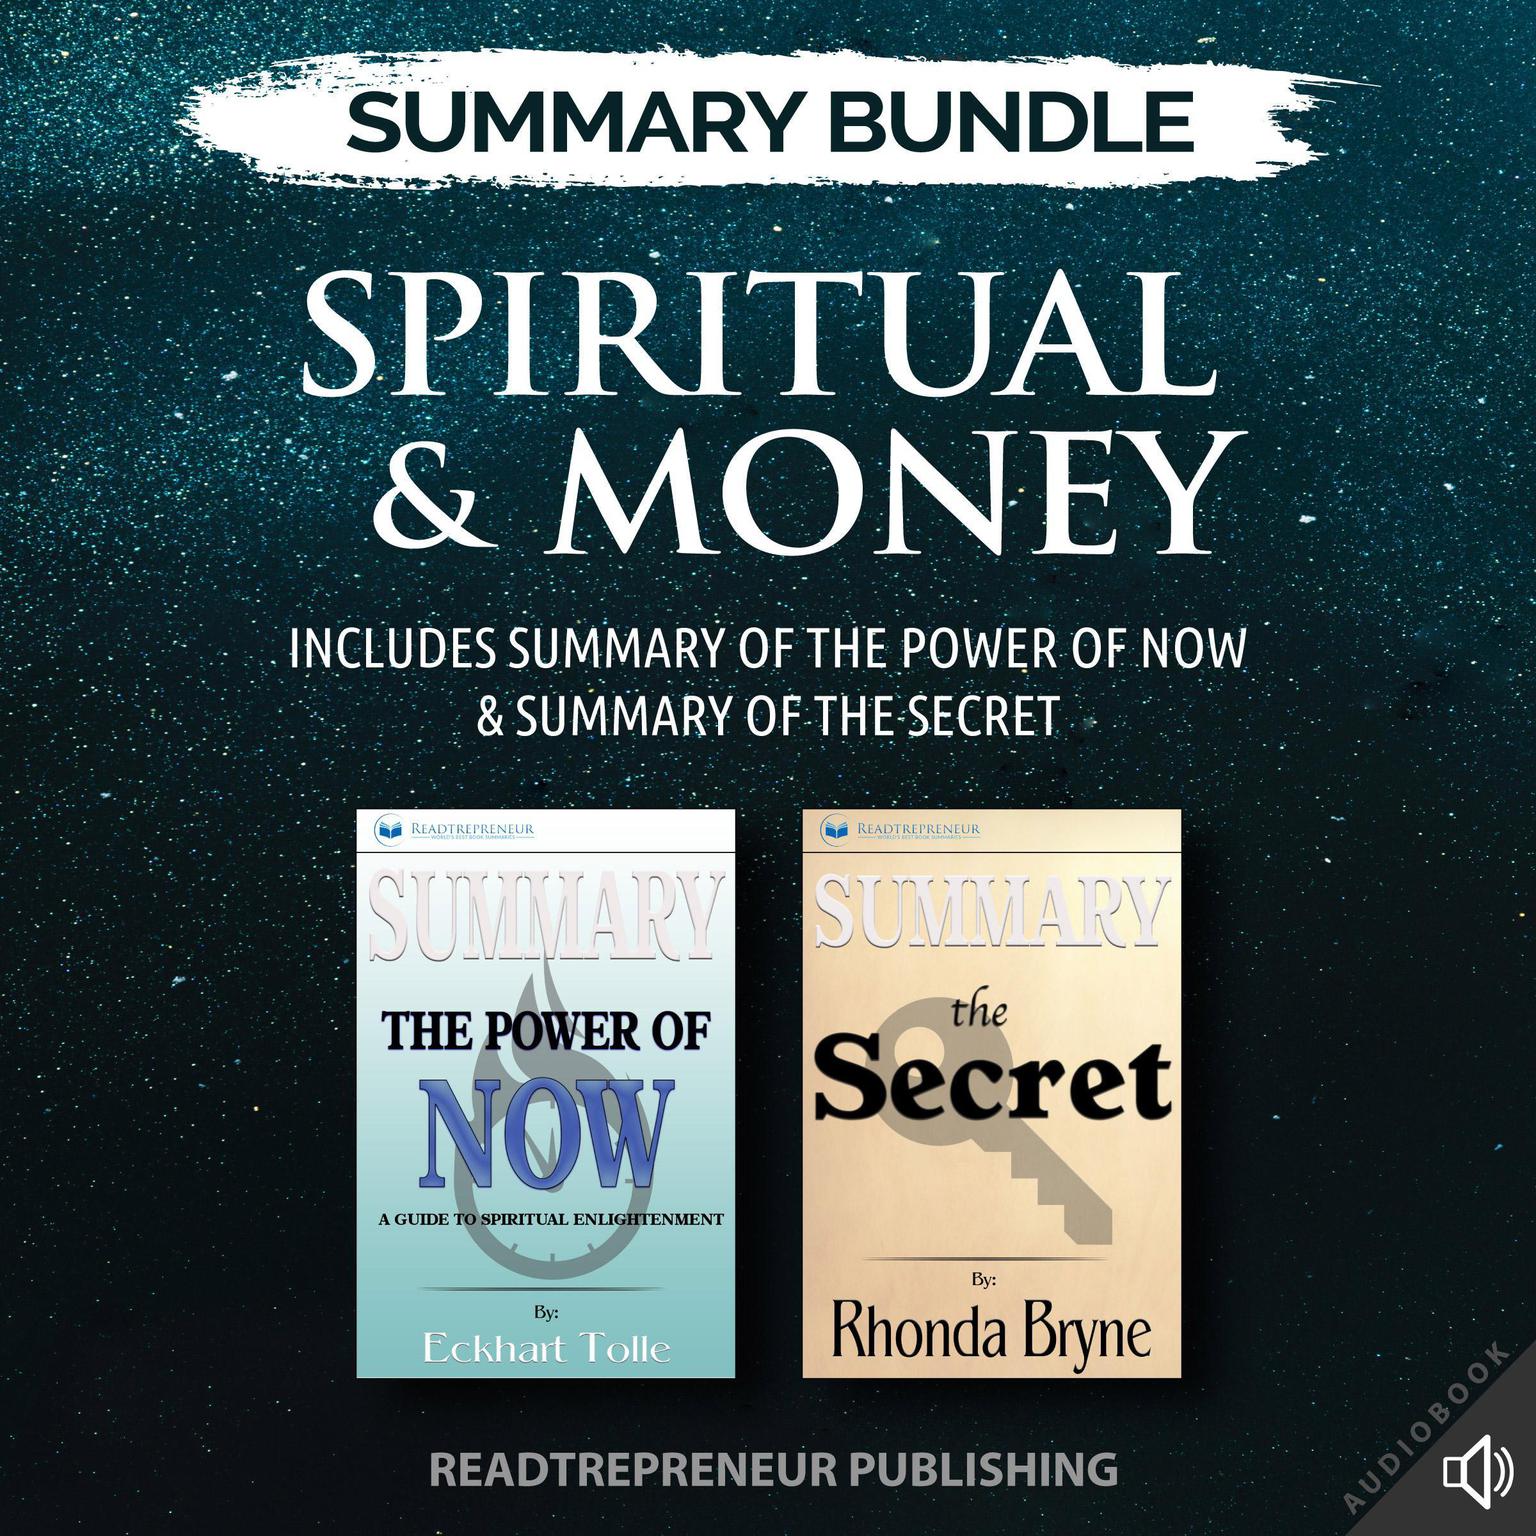 Summary Bundle: Spiritual & Money | Readtrepreneur Publishing: Includes Summary of The Power of Now & Summary of The Secret Audiobook, by Readtrepreneur Publishing